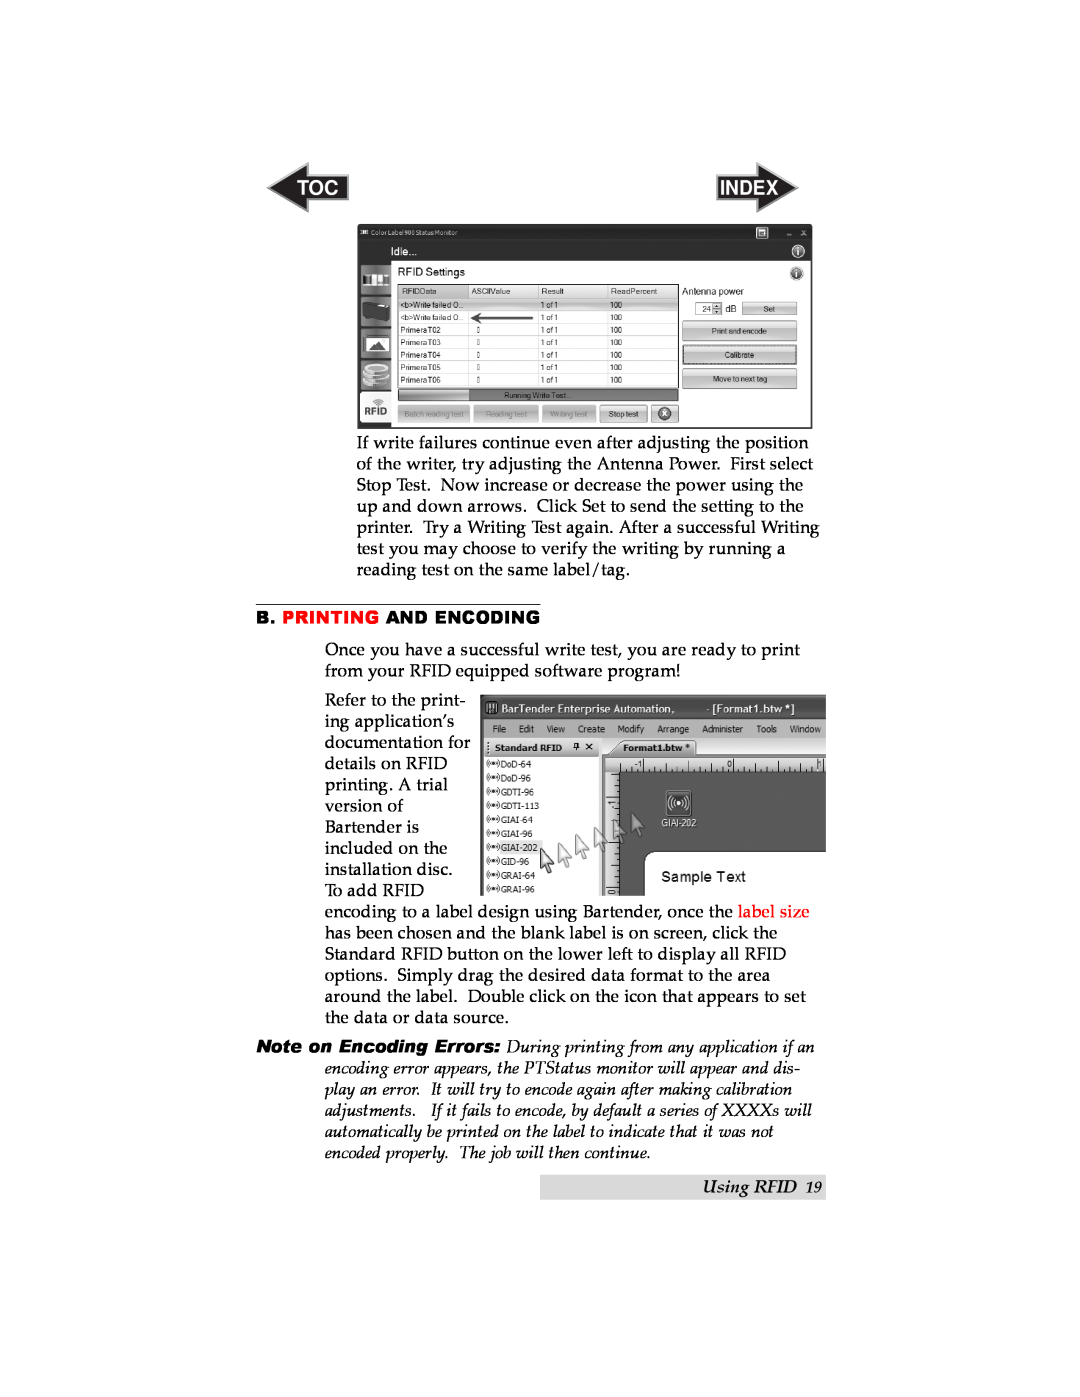 Primera Technology RX900 user manual B. Printing And Encoding, Index, Using RFID 